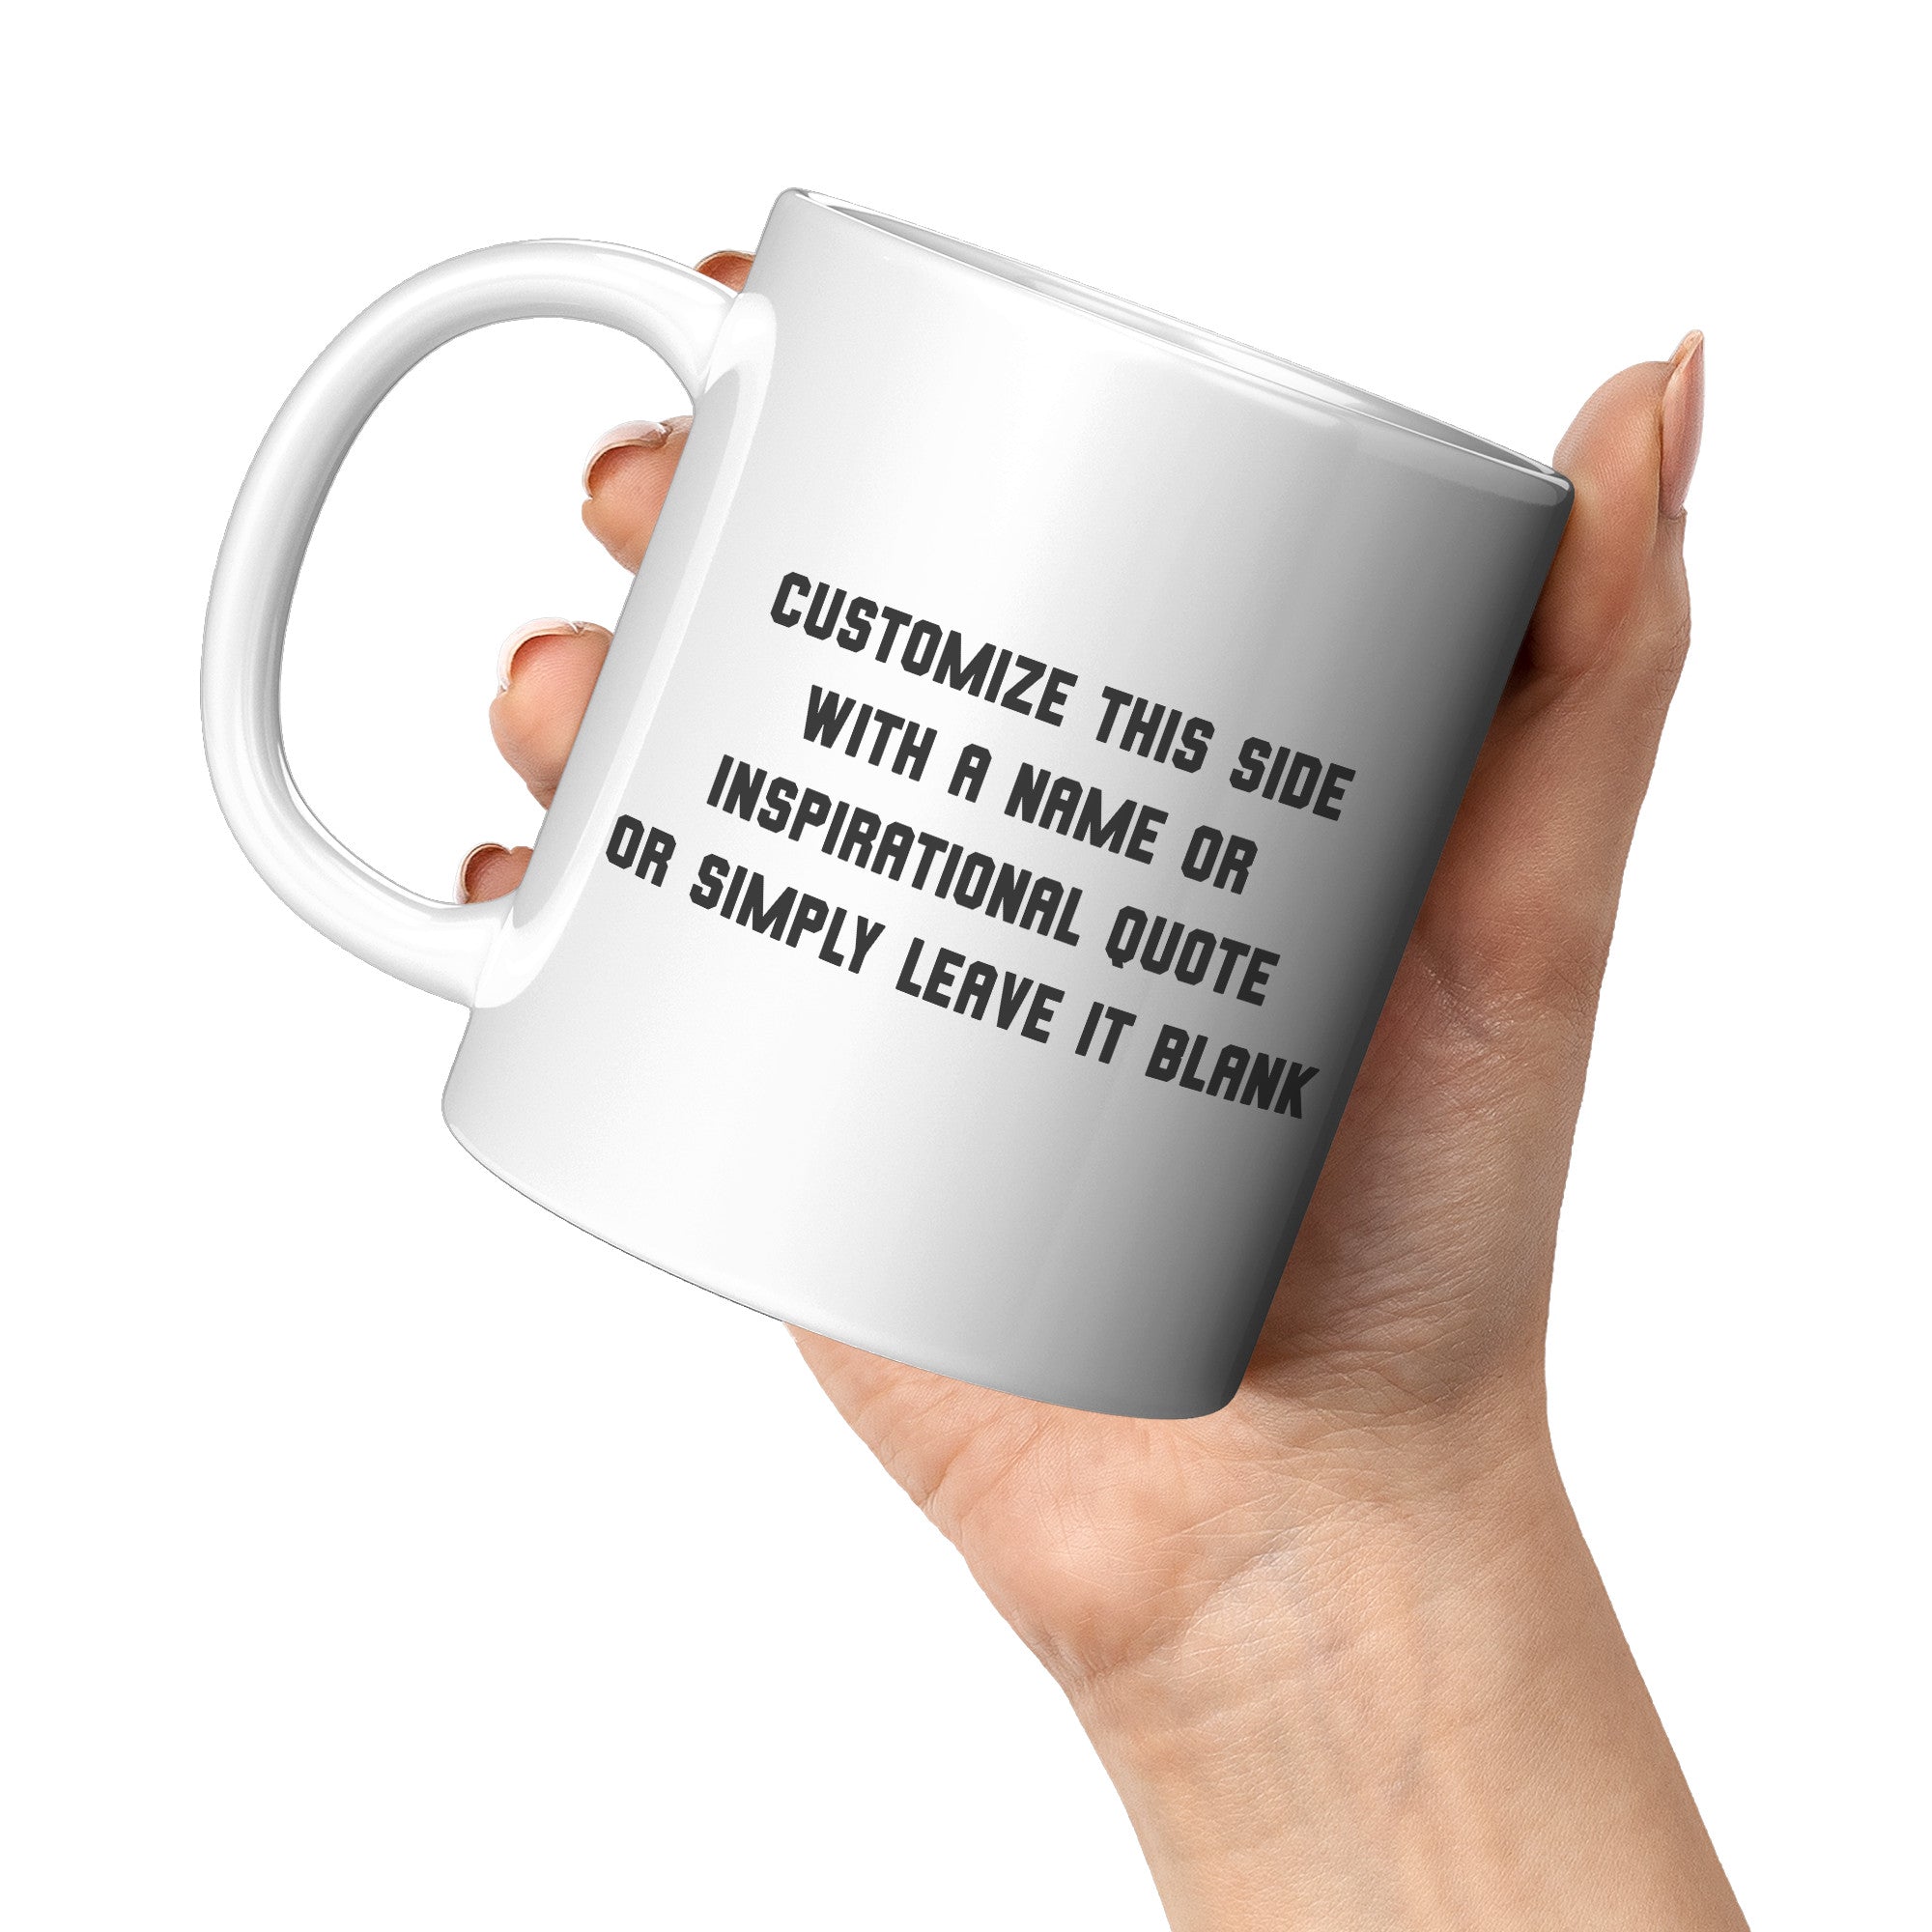 11oz Rottweiler Cartoon Coffee Mug - Bold Rottie Lover Coffee Mug - Perfect Gift for Rottweiler Owners - Strong and Loyal Dog Coffee Mug" - B